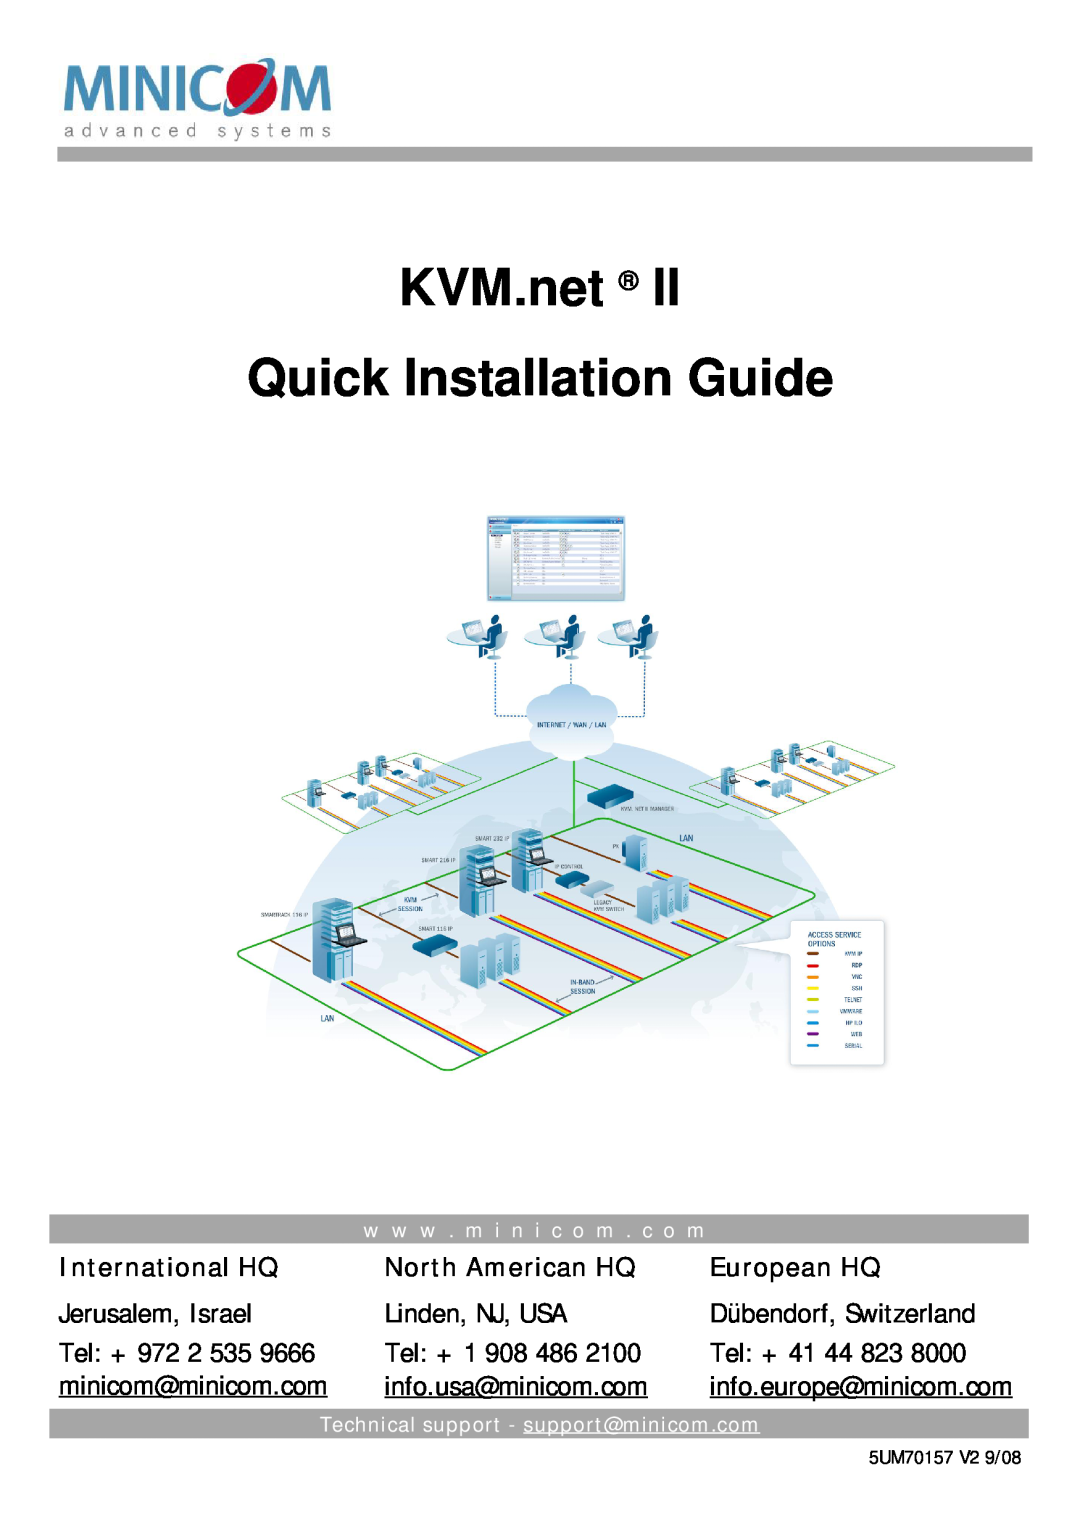 Minicom Advanced Systems KVM.net II manual KVM.net Quick Installation Guide, International HQ, North American HQ 